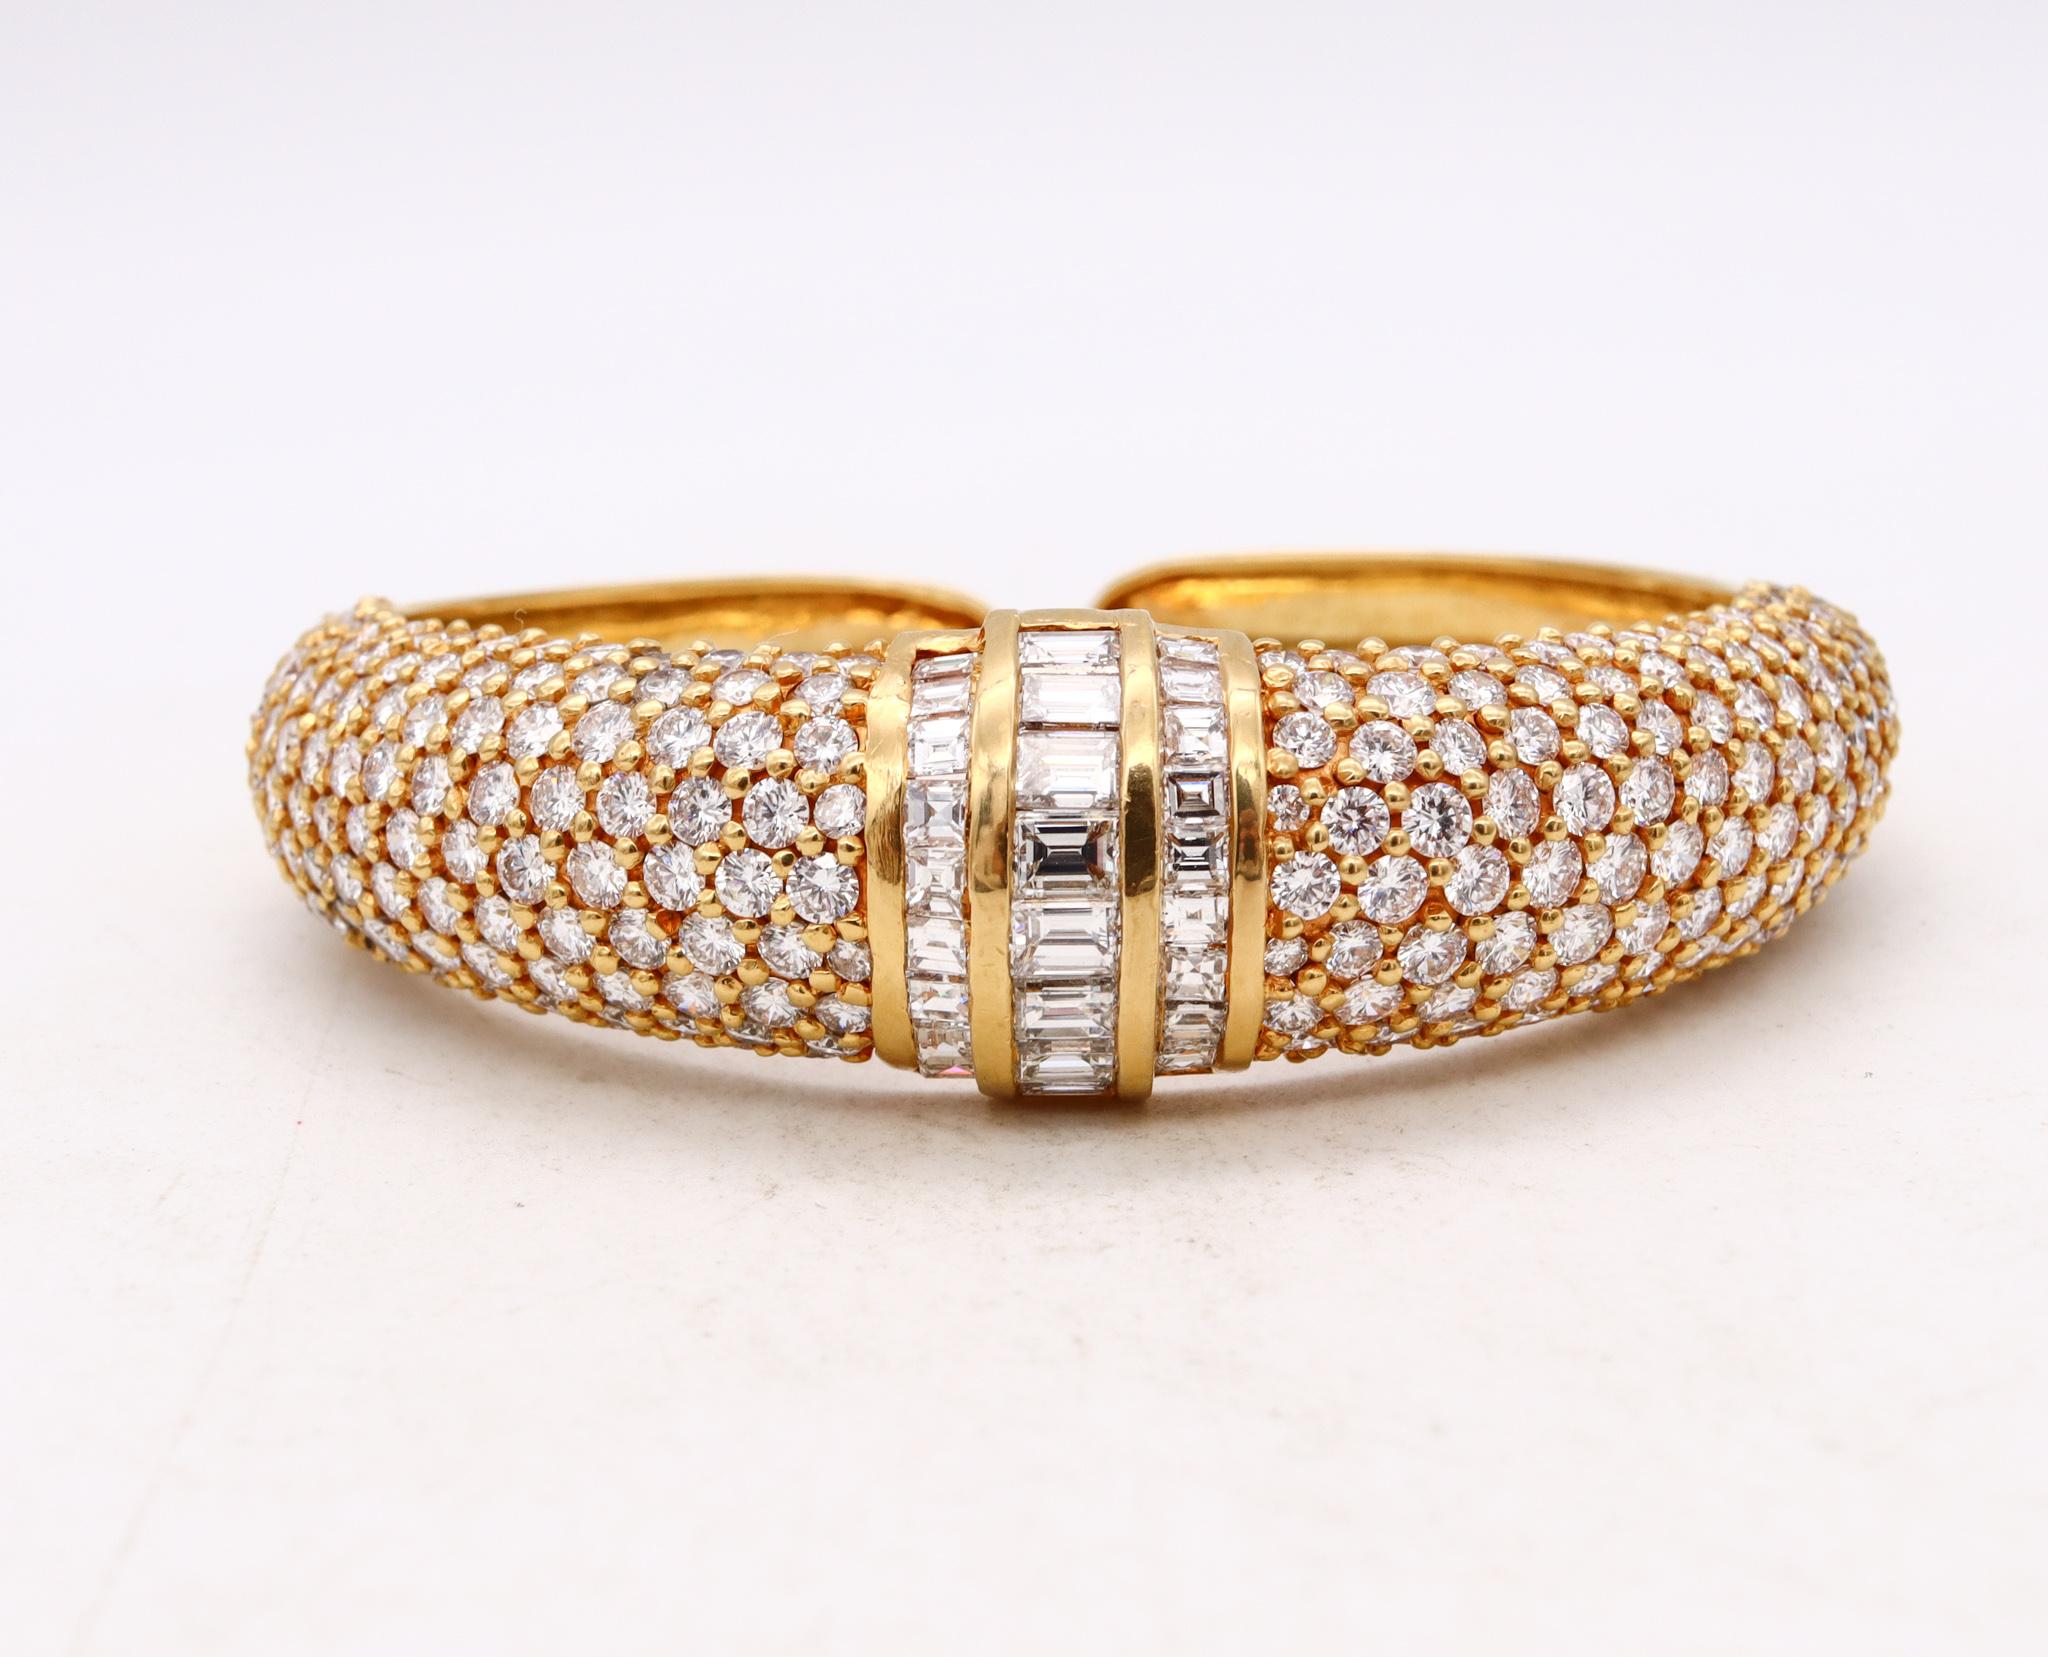 Exceptional Italian Designer Modern Bracelet in 18Kt Gold 21.12 Cts VS Diamonds For Sale 2